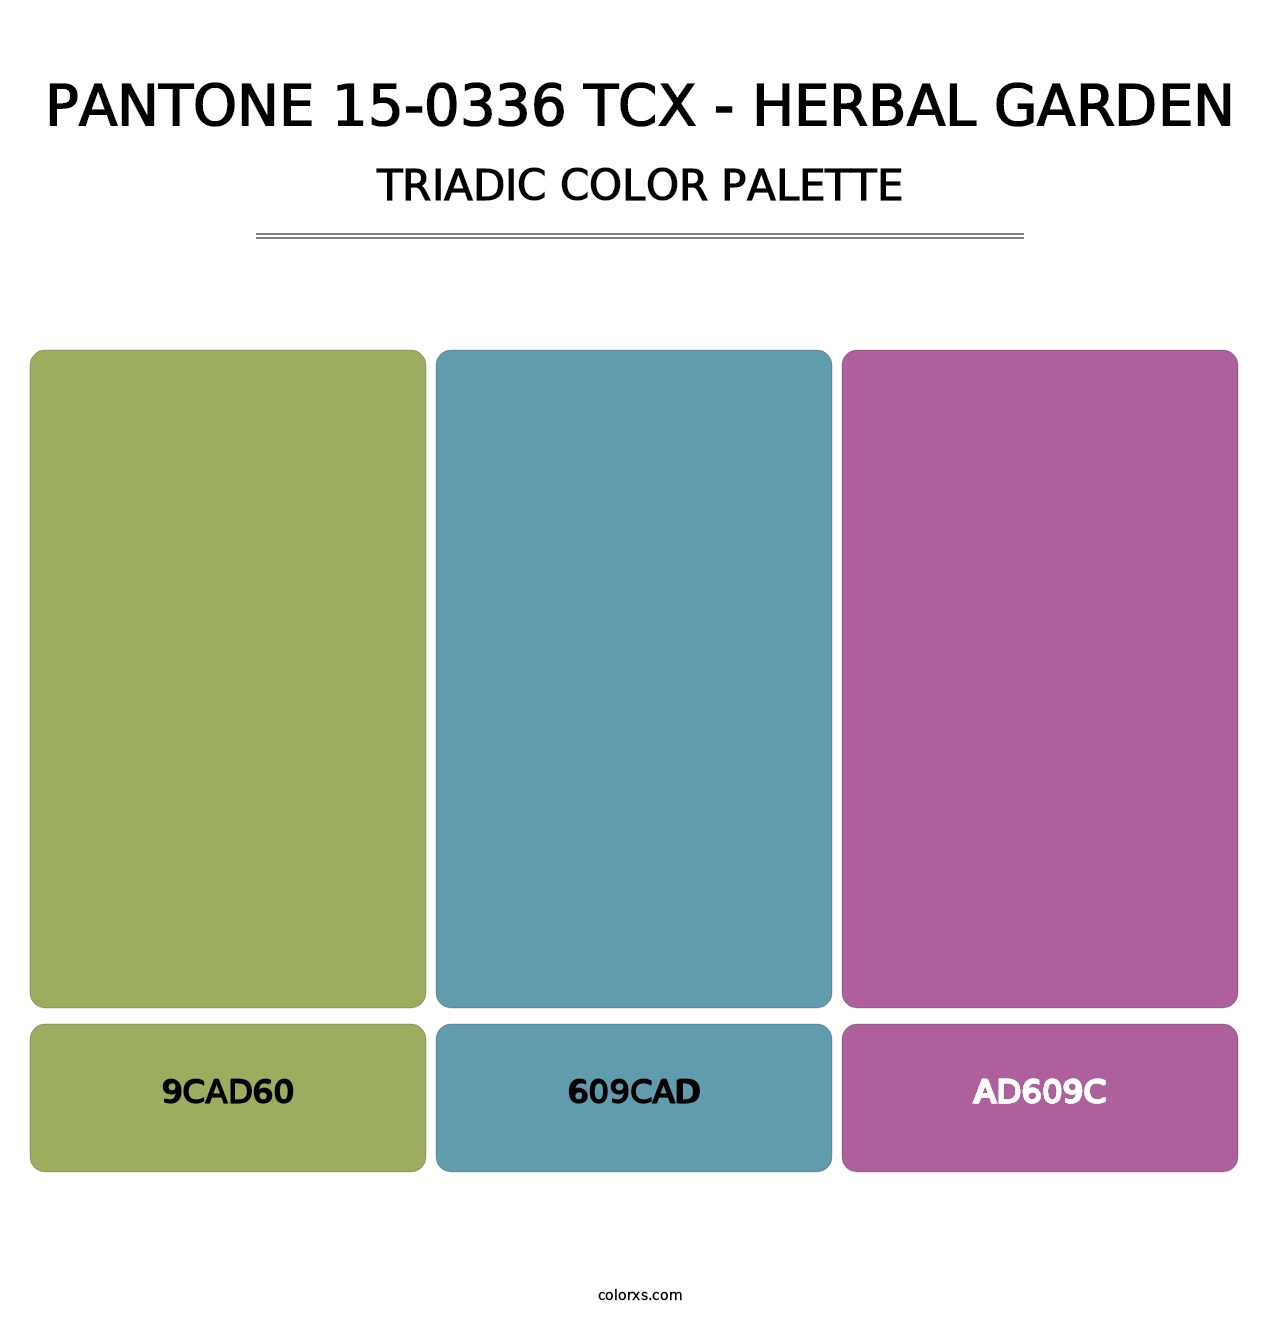 PANTONE 15-0336 TCX - Herbal Garden - Triadic Color Palette